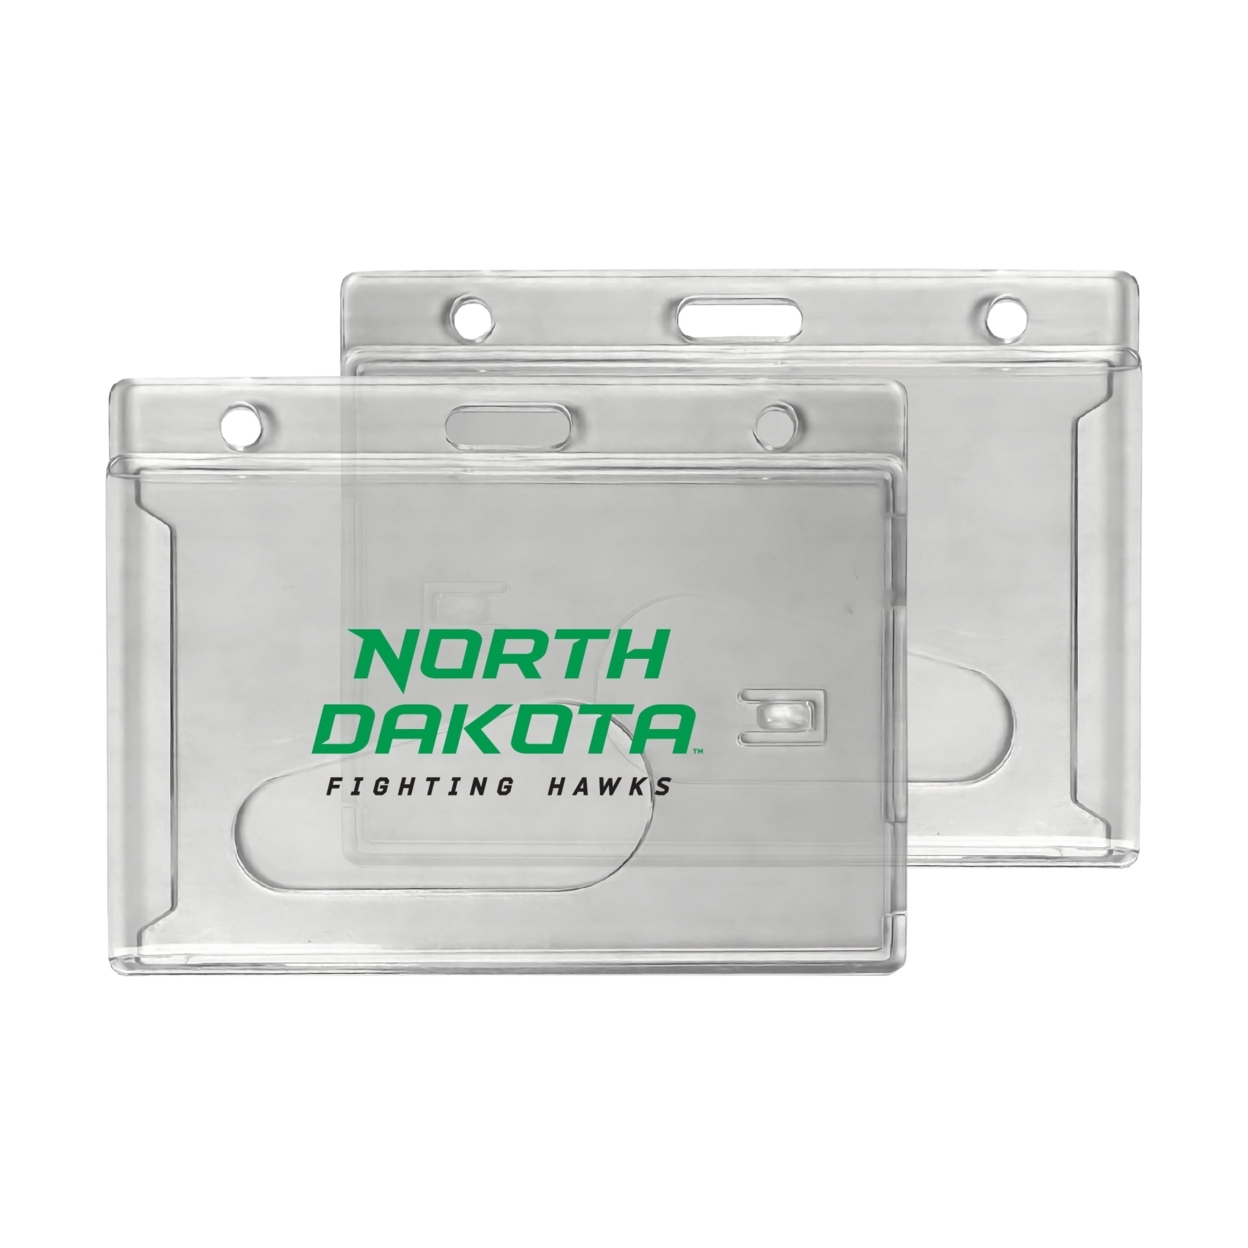 North Dakota Fighting Hawks Clear View ID Holder